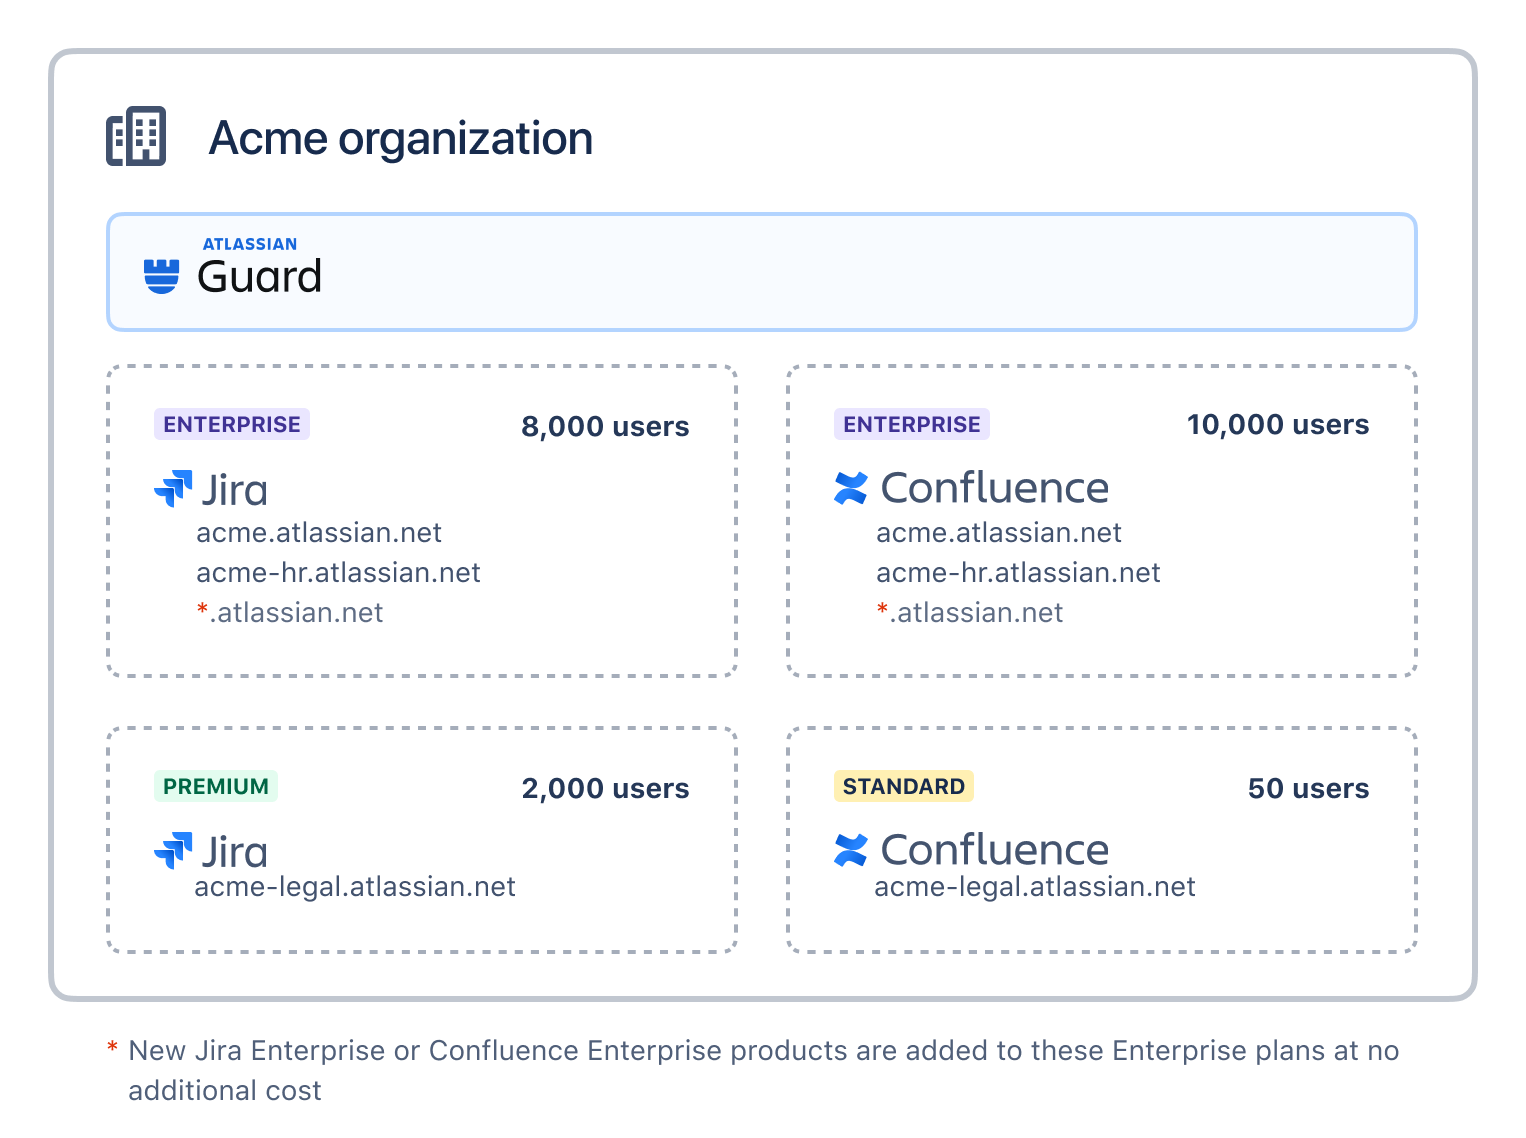 Example organization with Atlassian Access, two Enterprise plans, a Standard plan, a Premium plan.